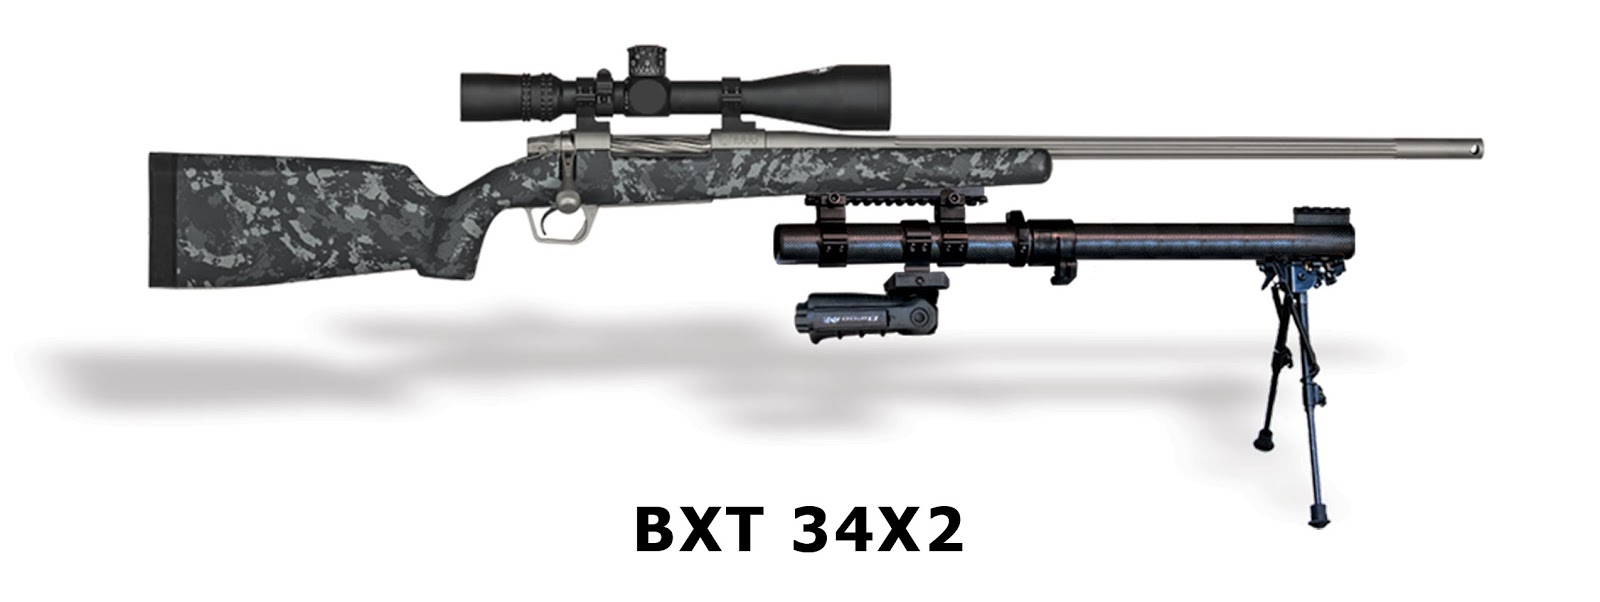 34X2-on-rifle.jpg